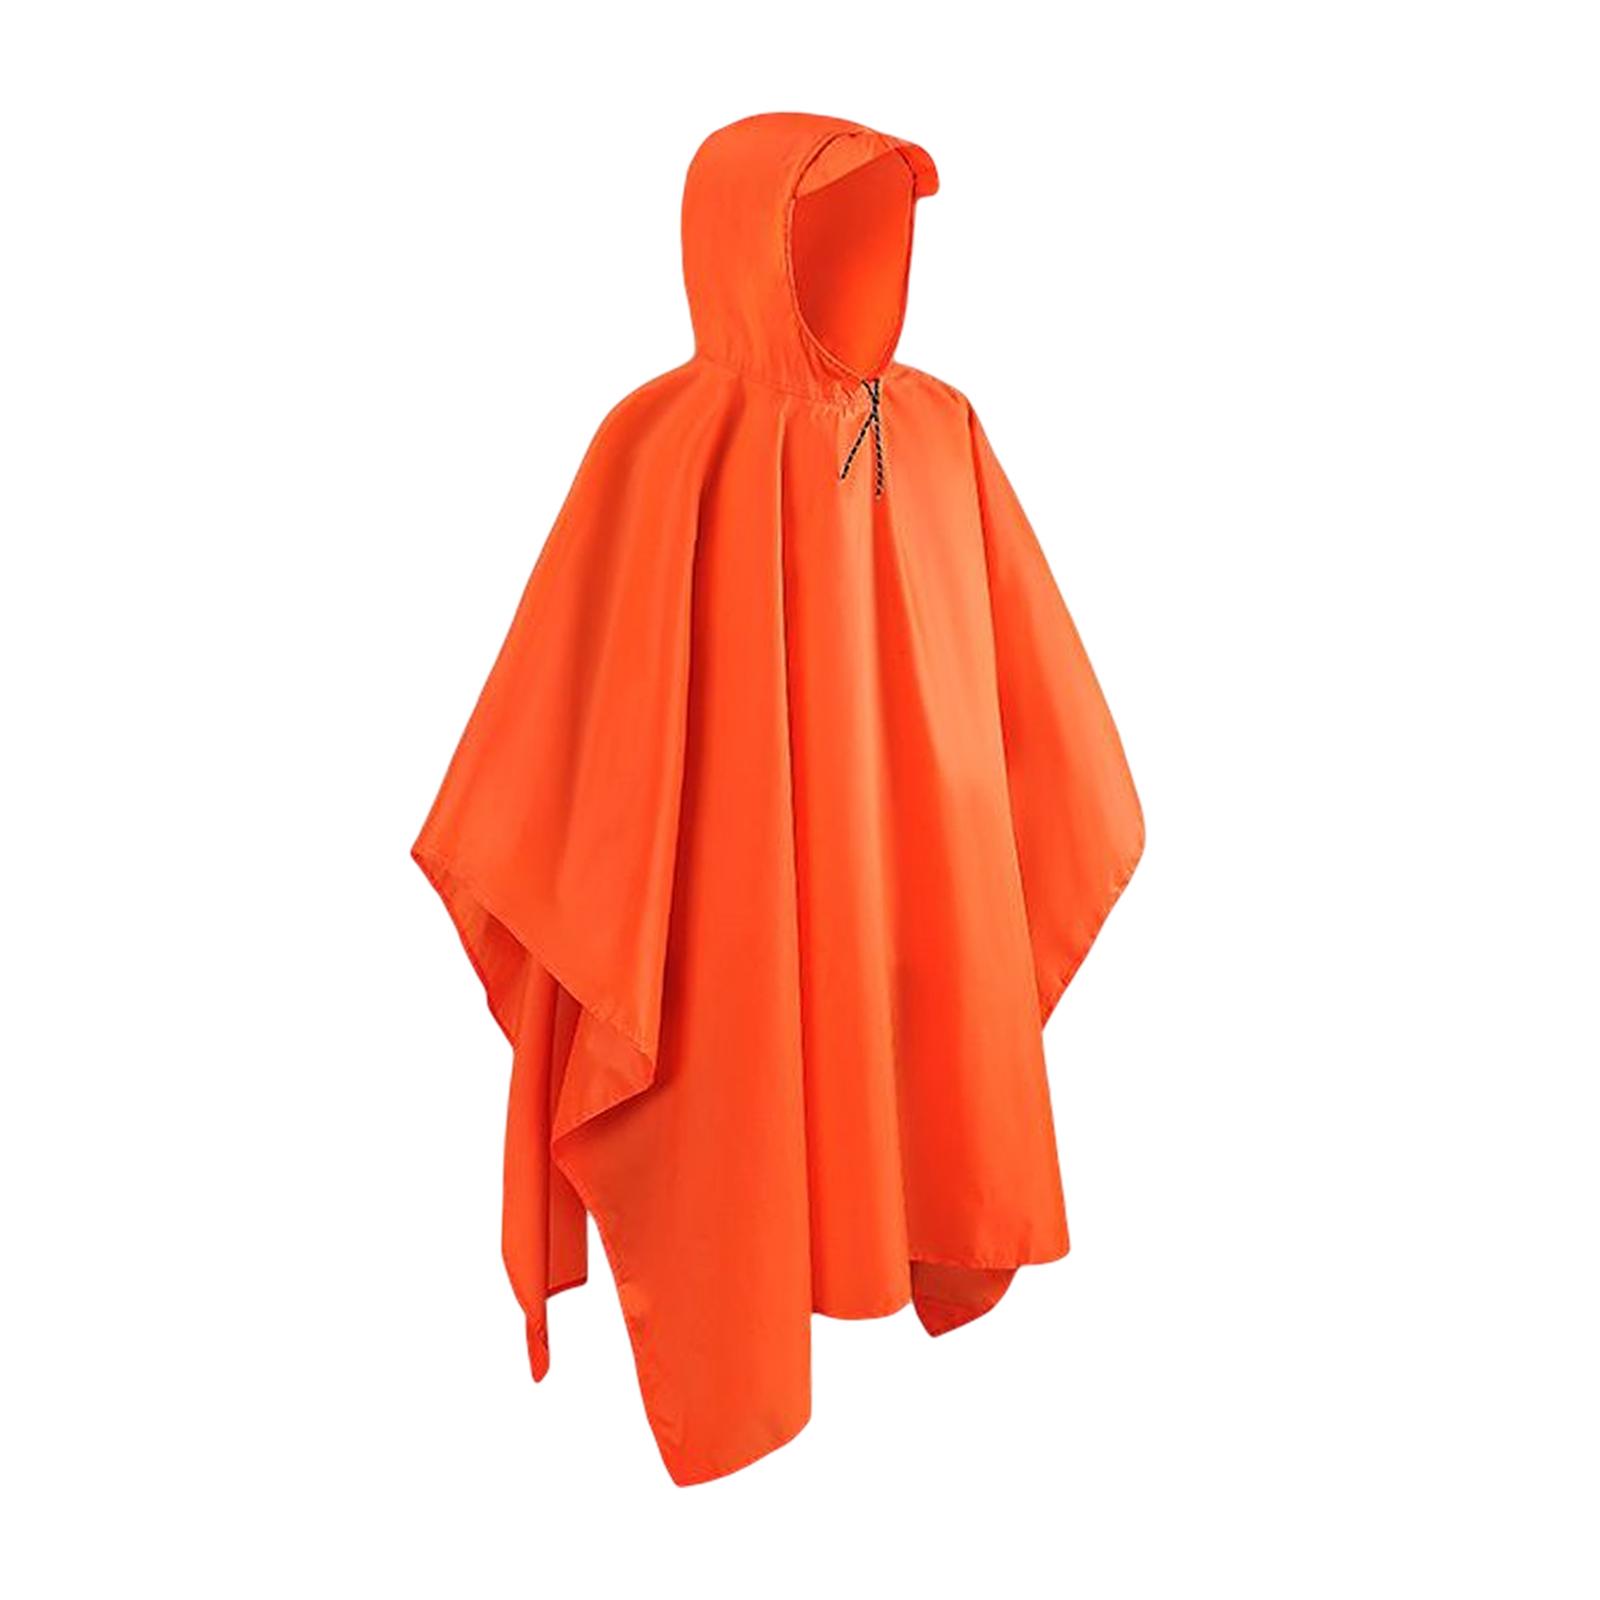 Wet Weather Rain Poncho with Pocket Reusable Adult Emergency Outdoor Orange